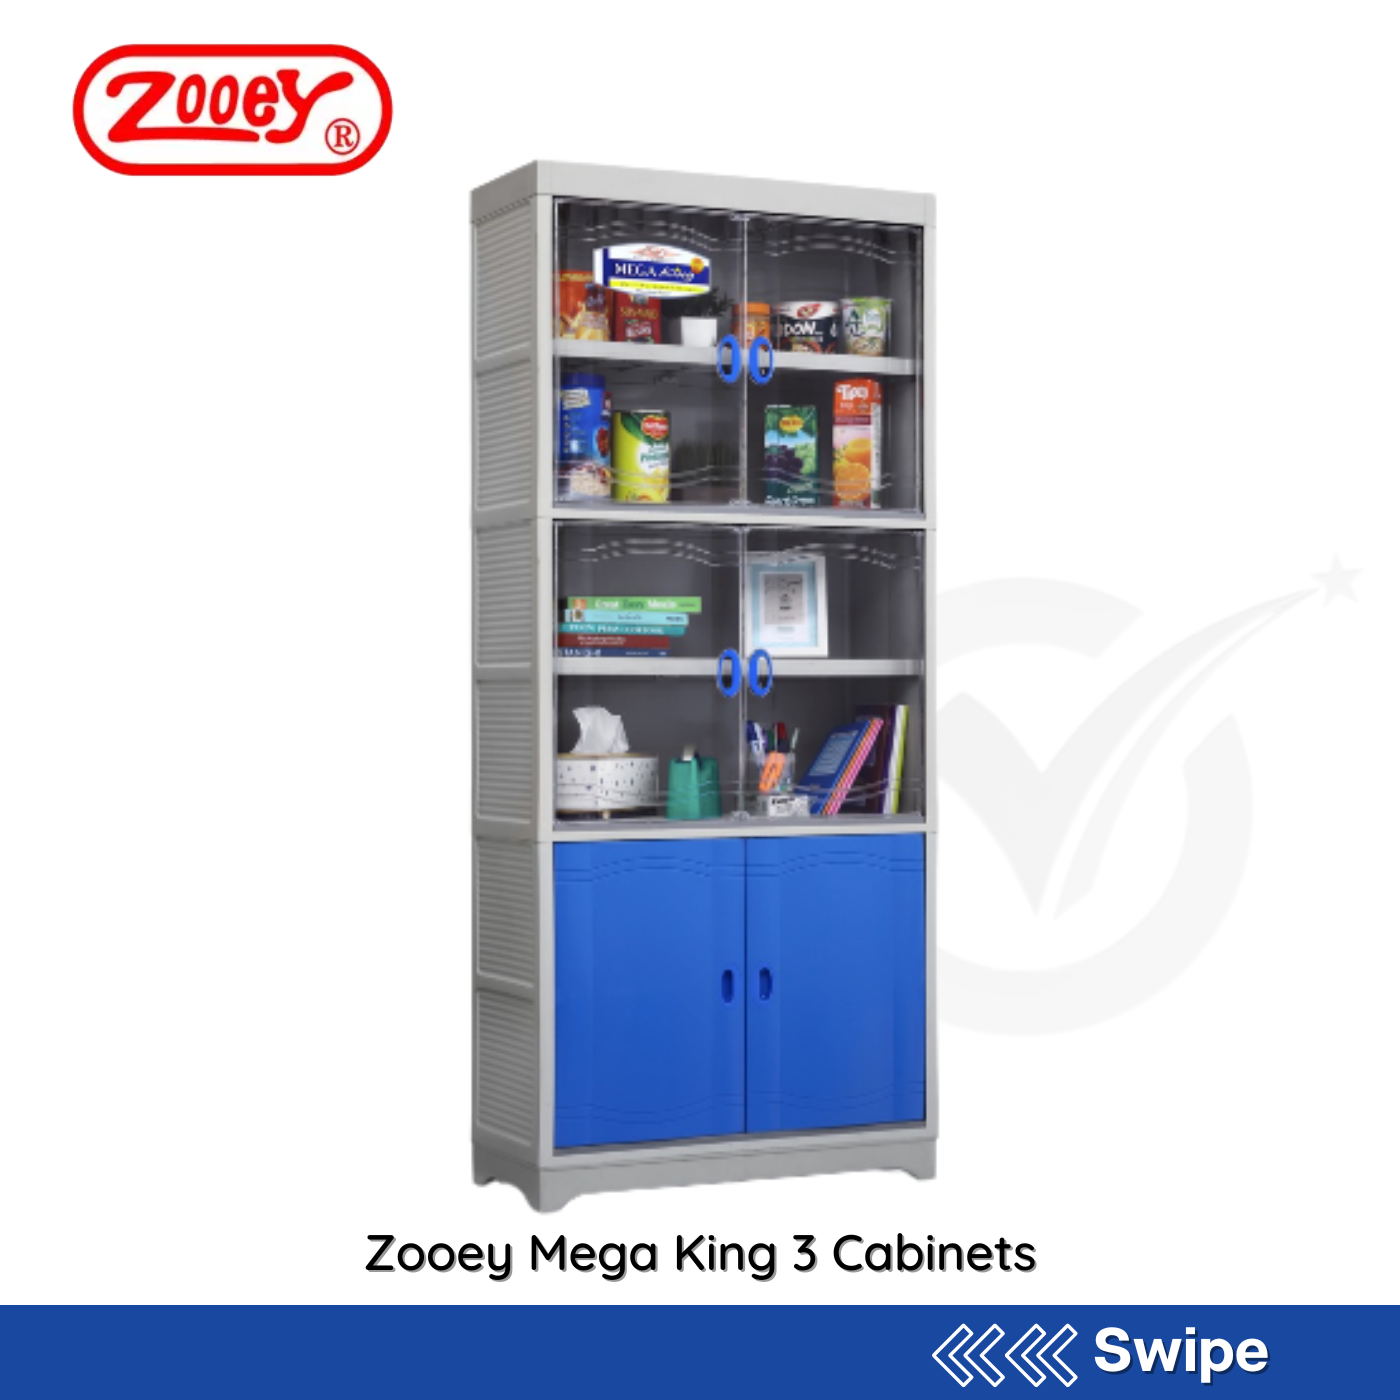 Zooey Mega King 3 Cabinets - People's Choice Marketing